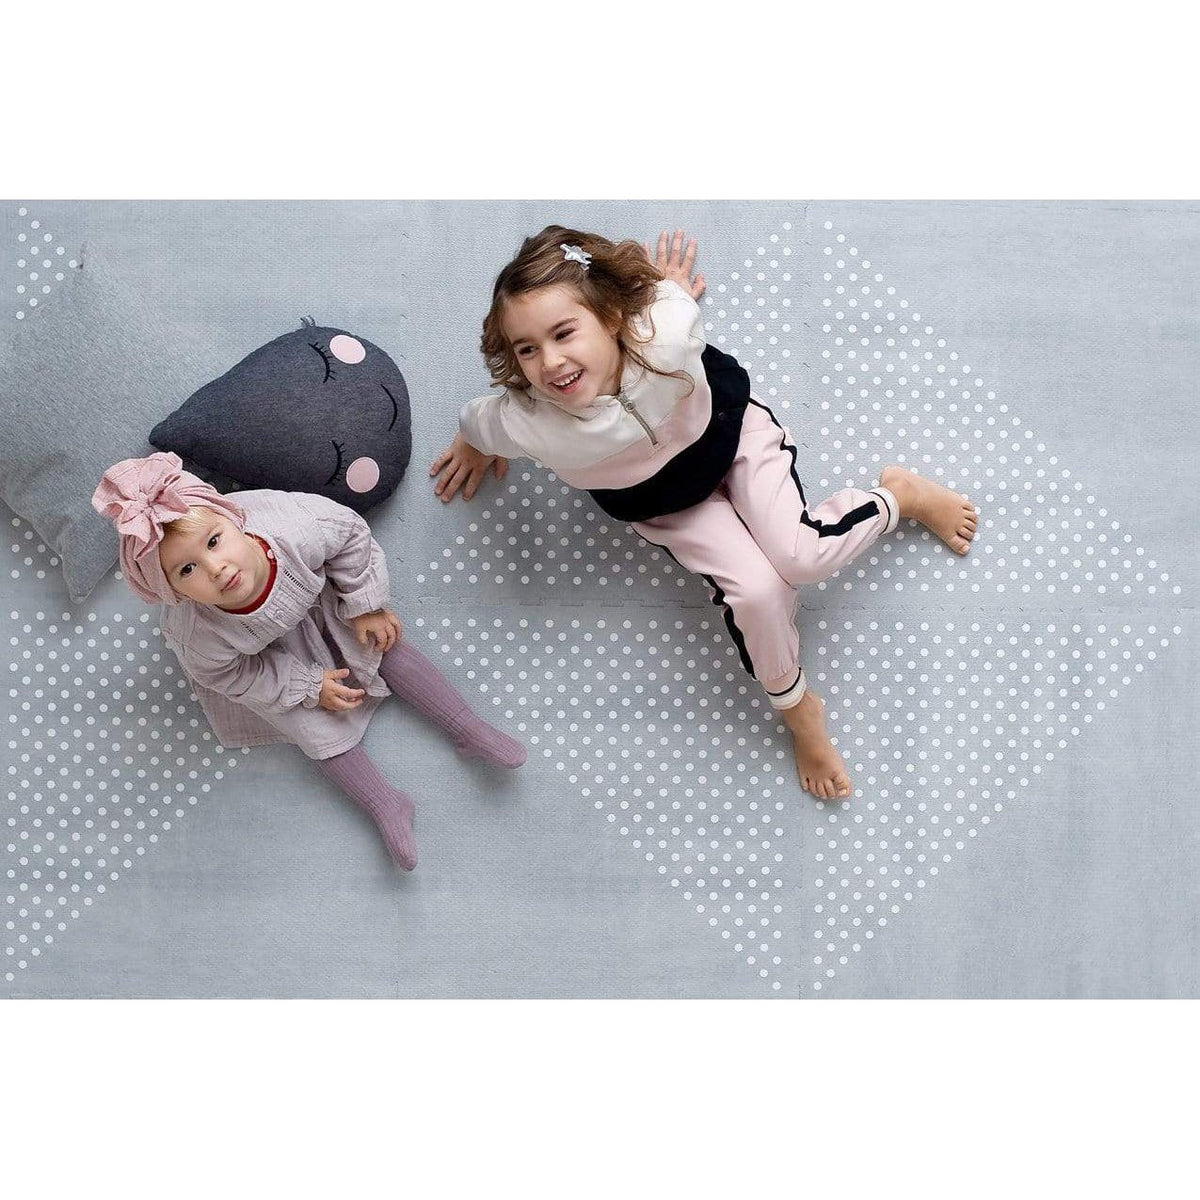 toddlekind-prettier-playmat-earth-dove-120x180cm-6-tiles-&amp;-12-edging-borders- (11)